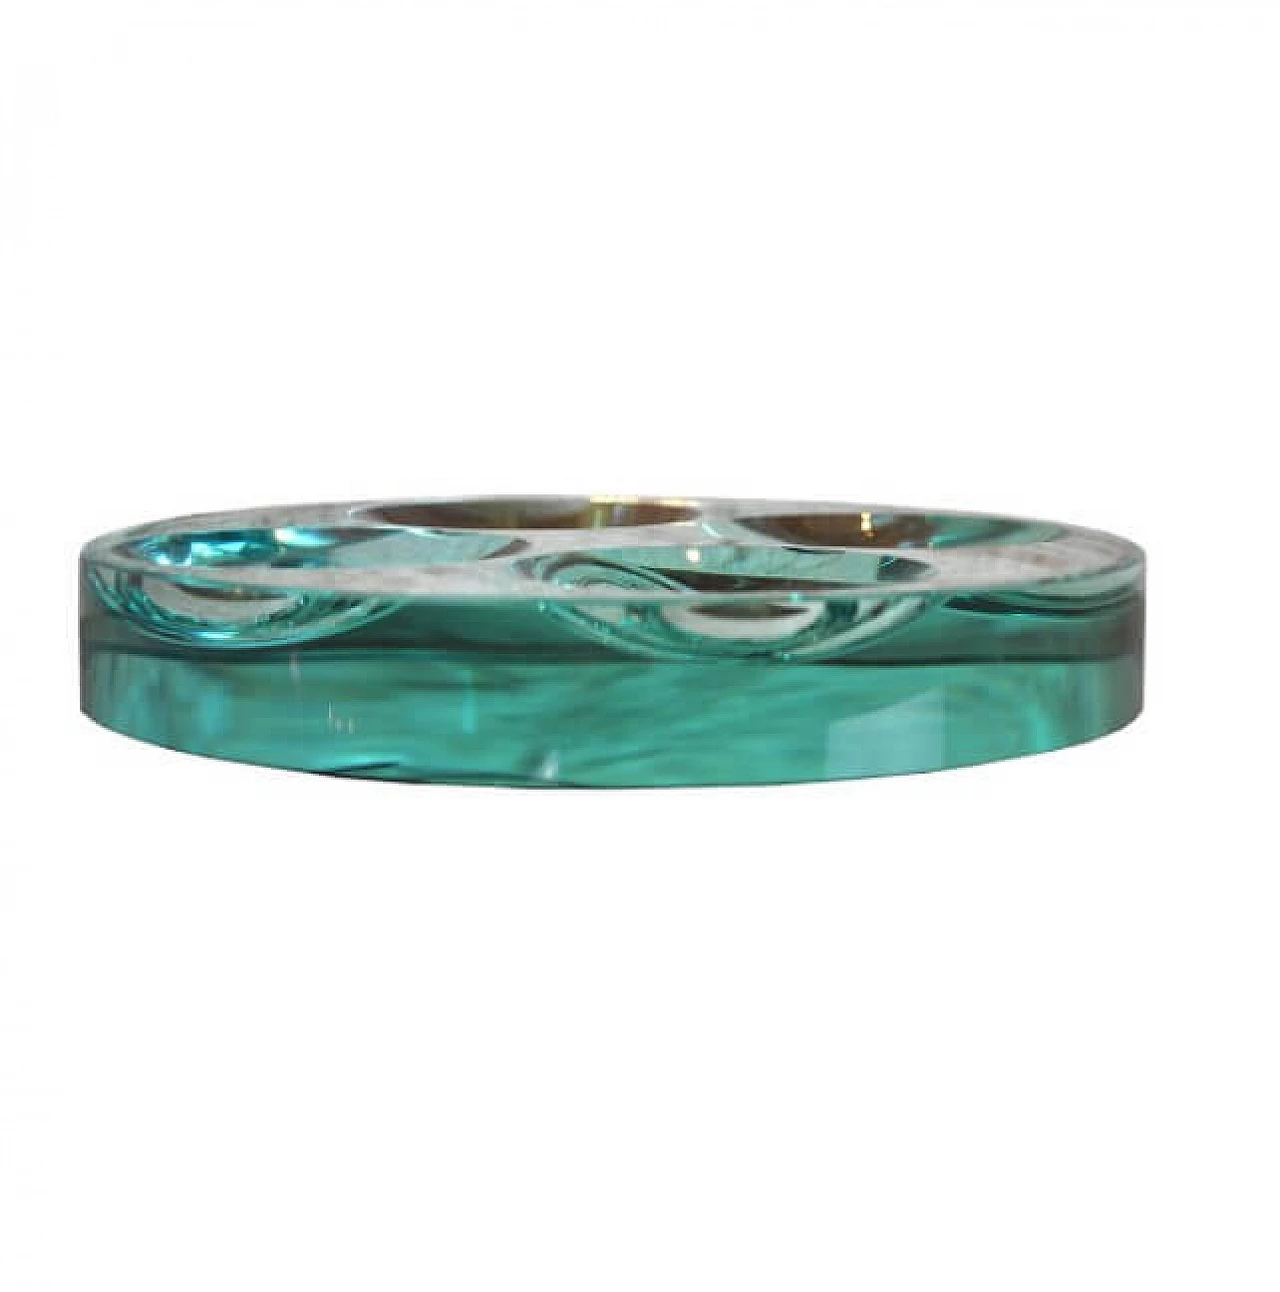 Beveled glass bowl by Fontana Arte, 60s 1220143